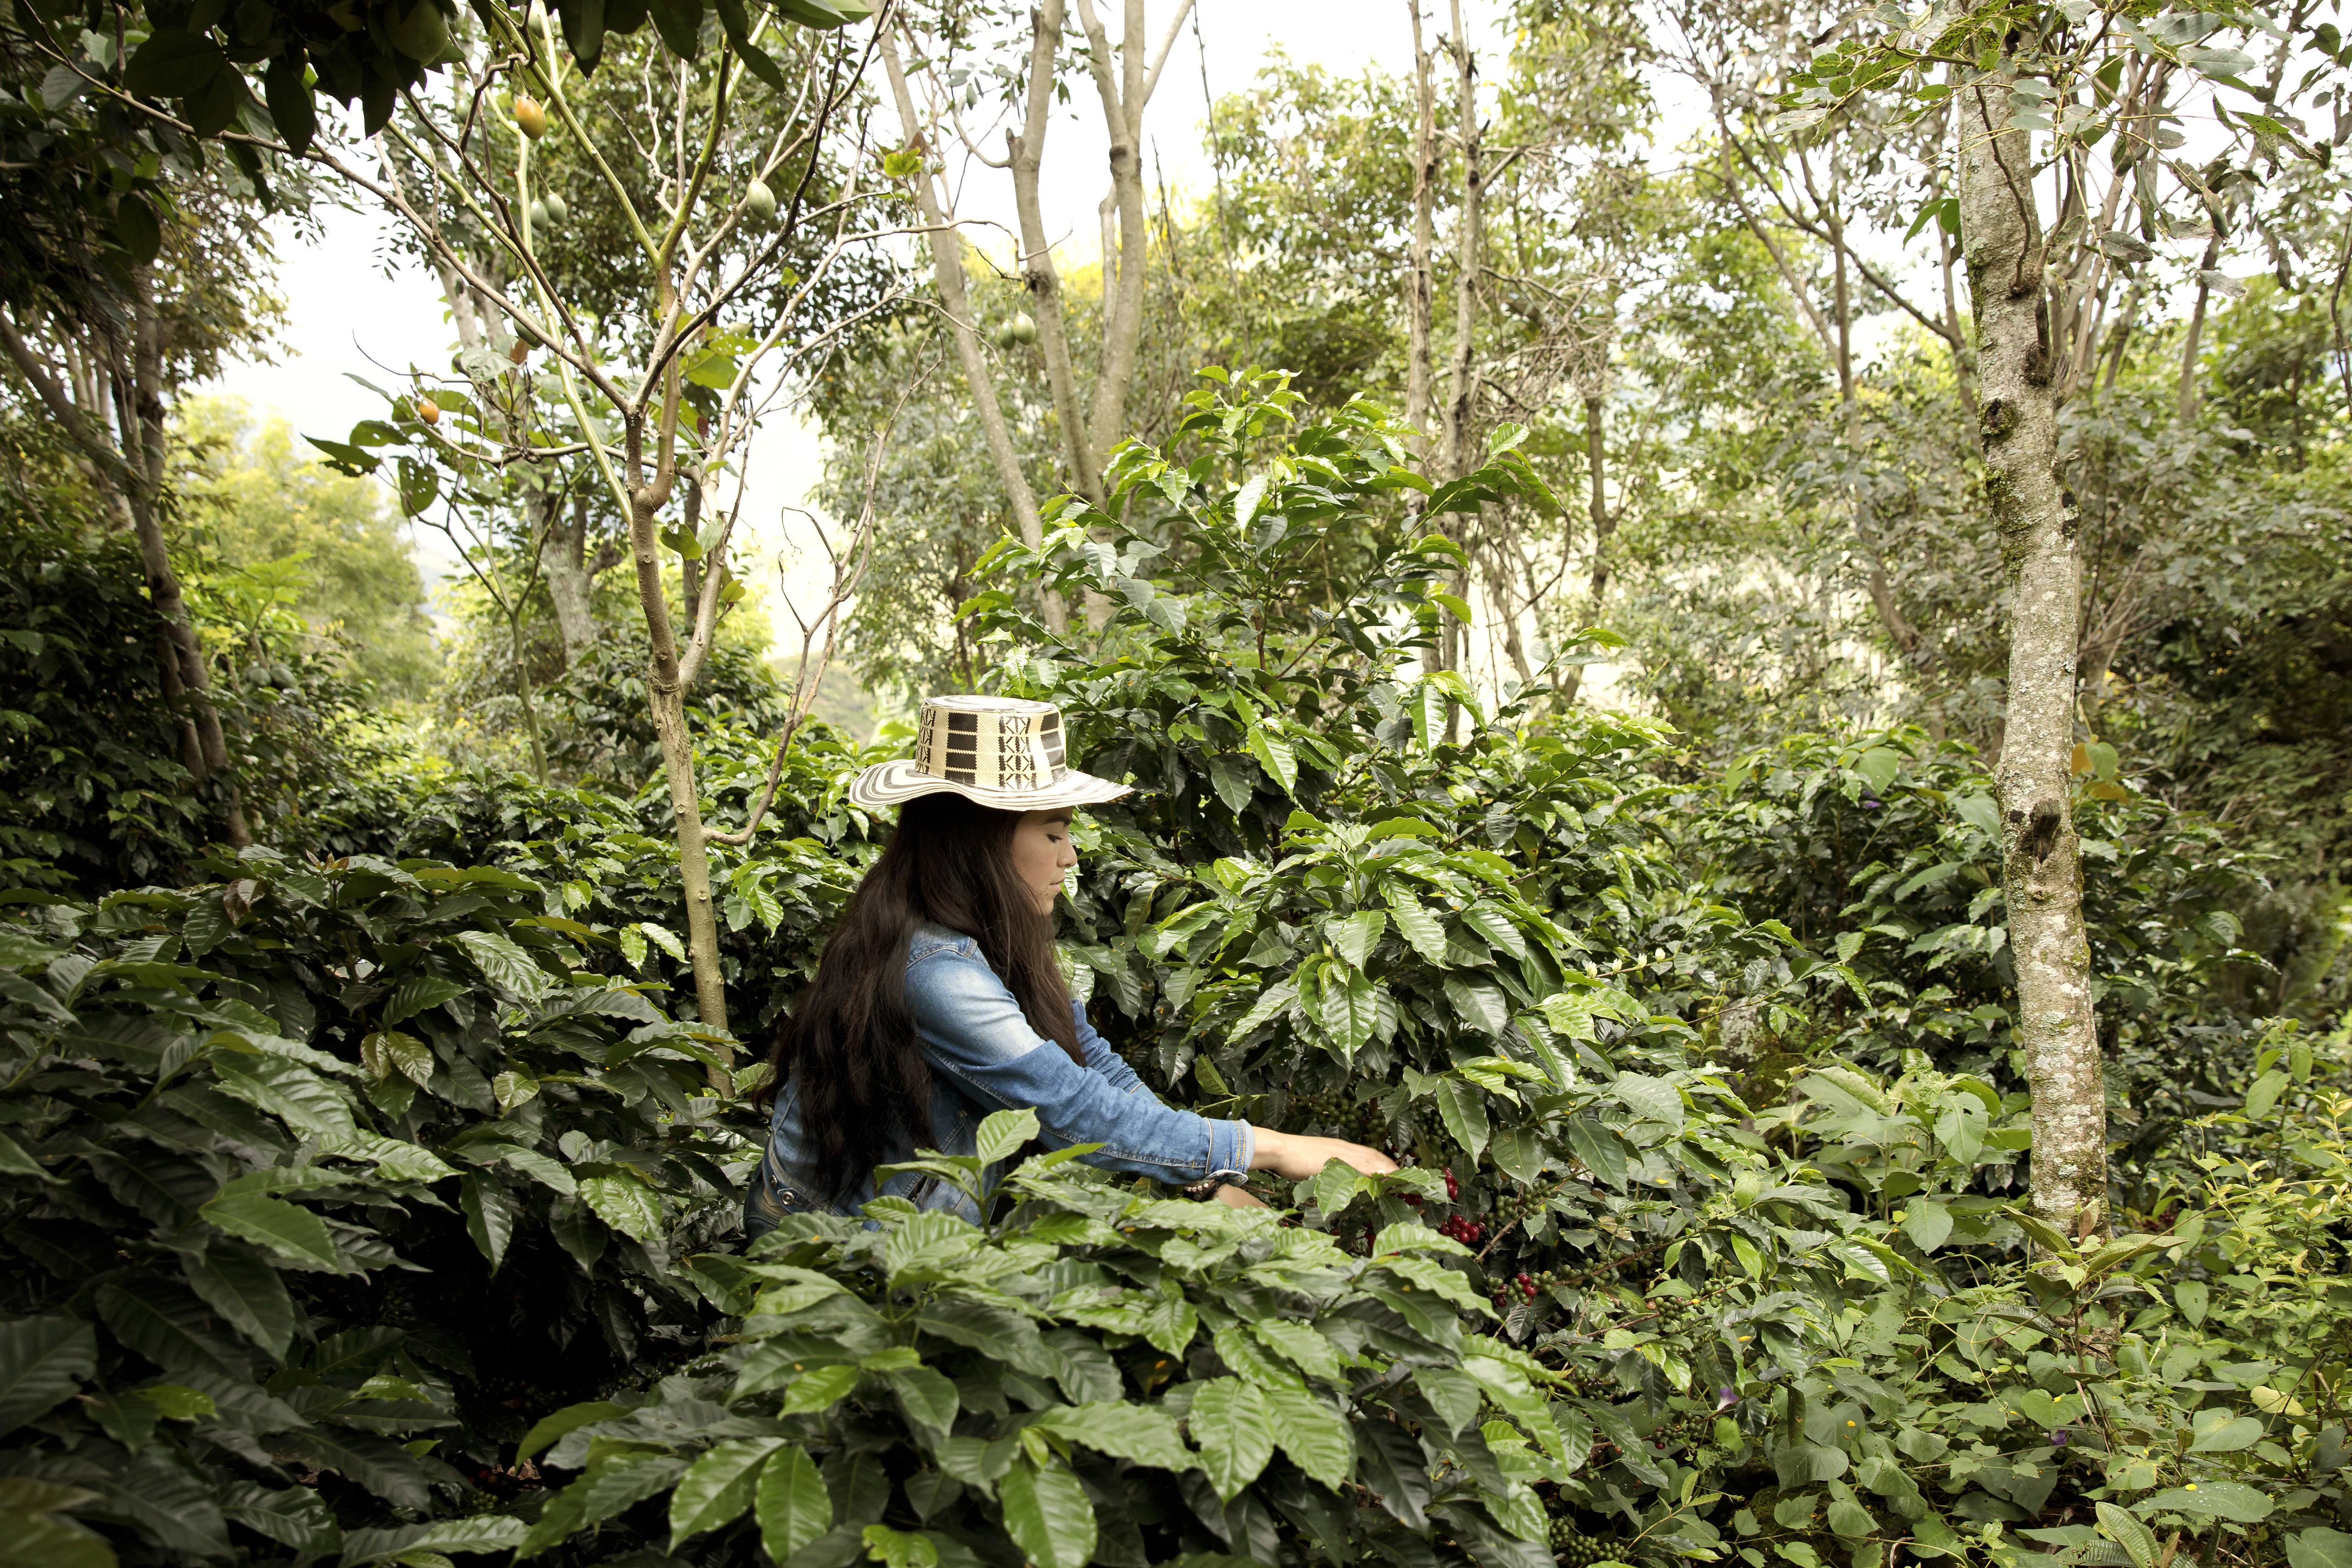 A woman in Colombia picks Coffee beans. Photo: UN Women/Ryan Brown